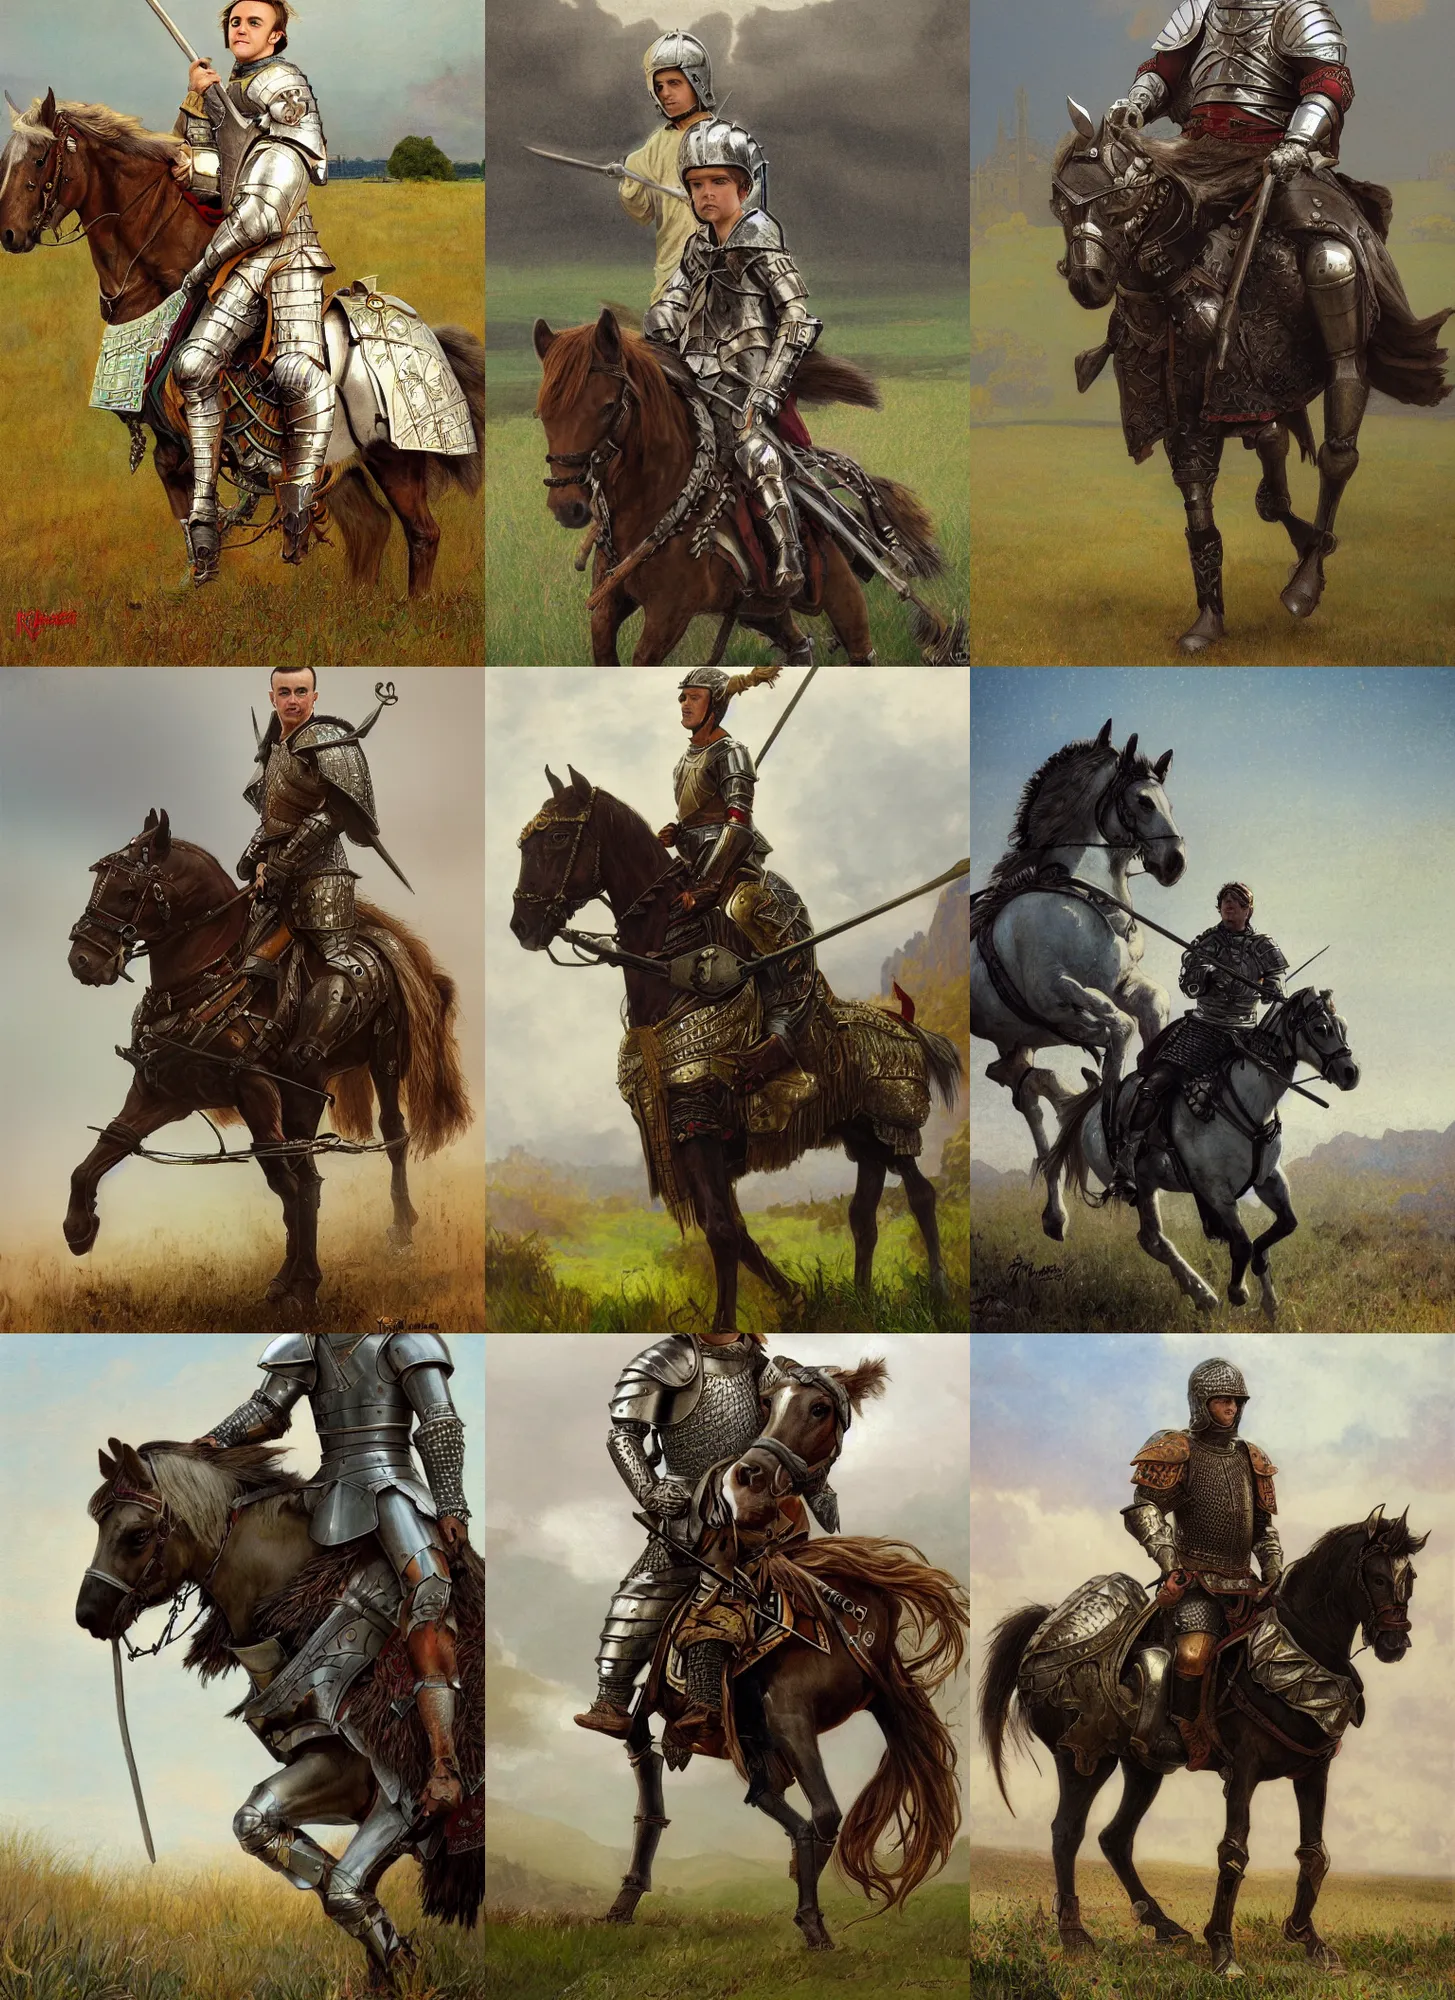 Prompt: frankie muniz young with medieval armor, on horse, field background, intricate, elegant, highly detailed, artstation, sharp focus, illustration, rutkowski, mucha